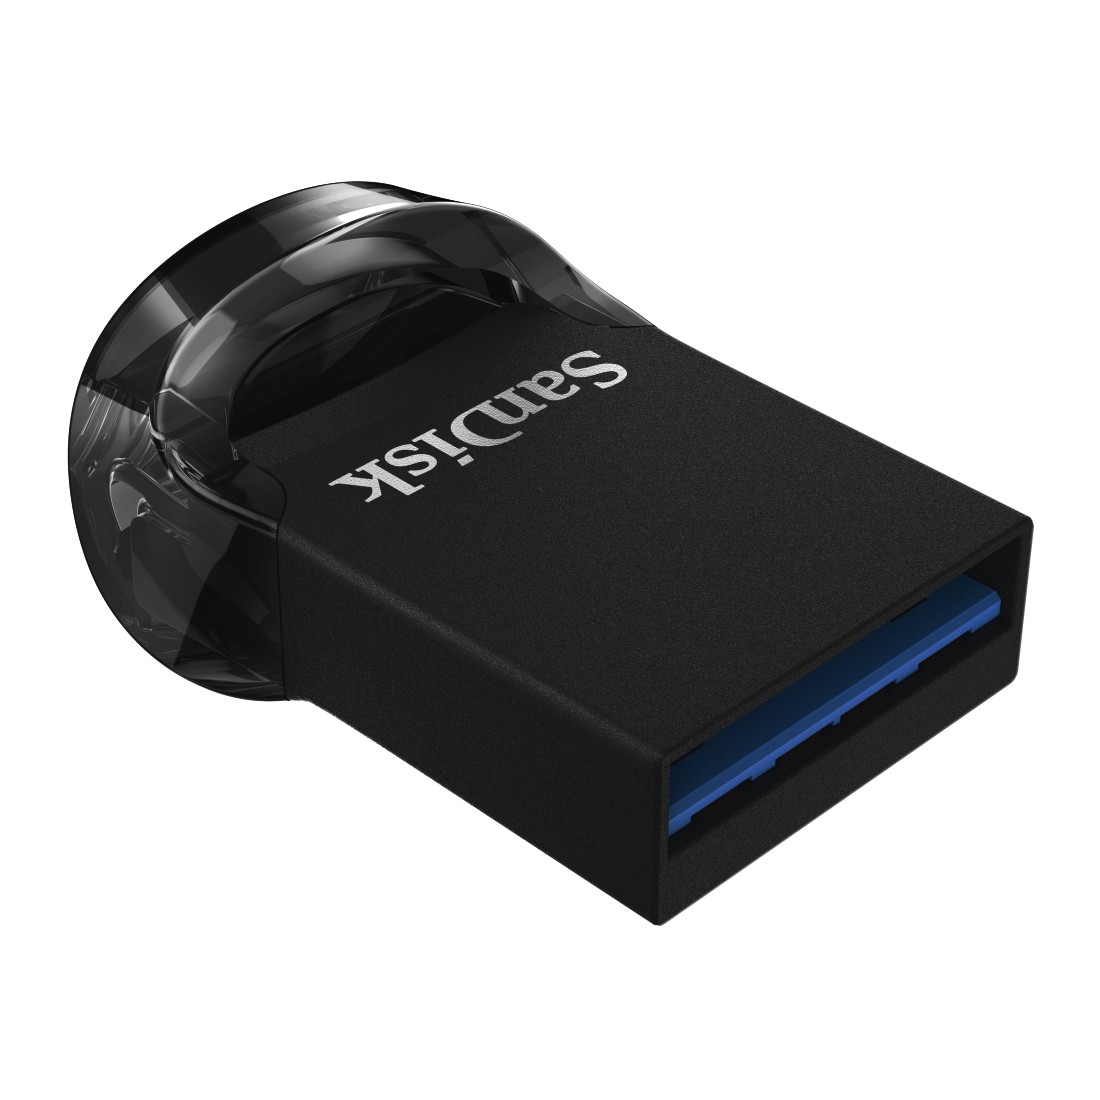 USB kľúč SanDisk Ultra Fit, 256GB, USB 3.1 - rýchlosť 130MB/s (SDCZ430-256G-G46)